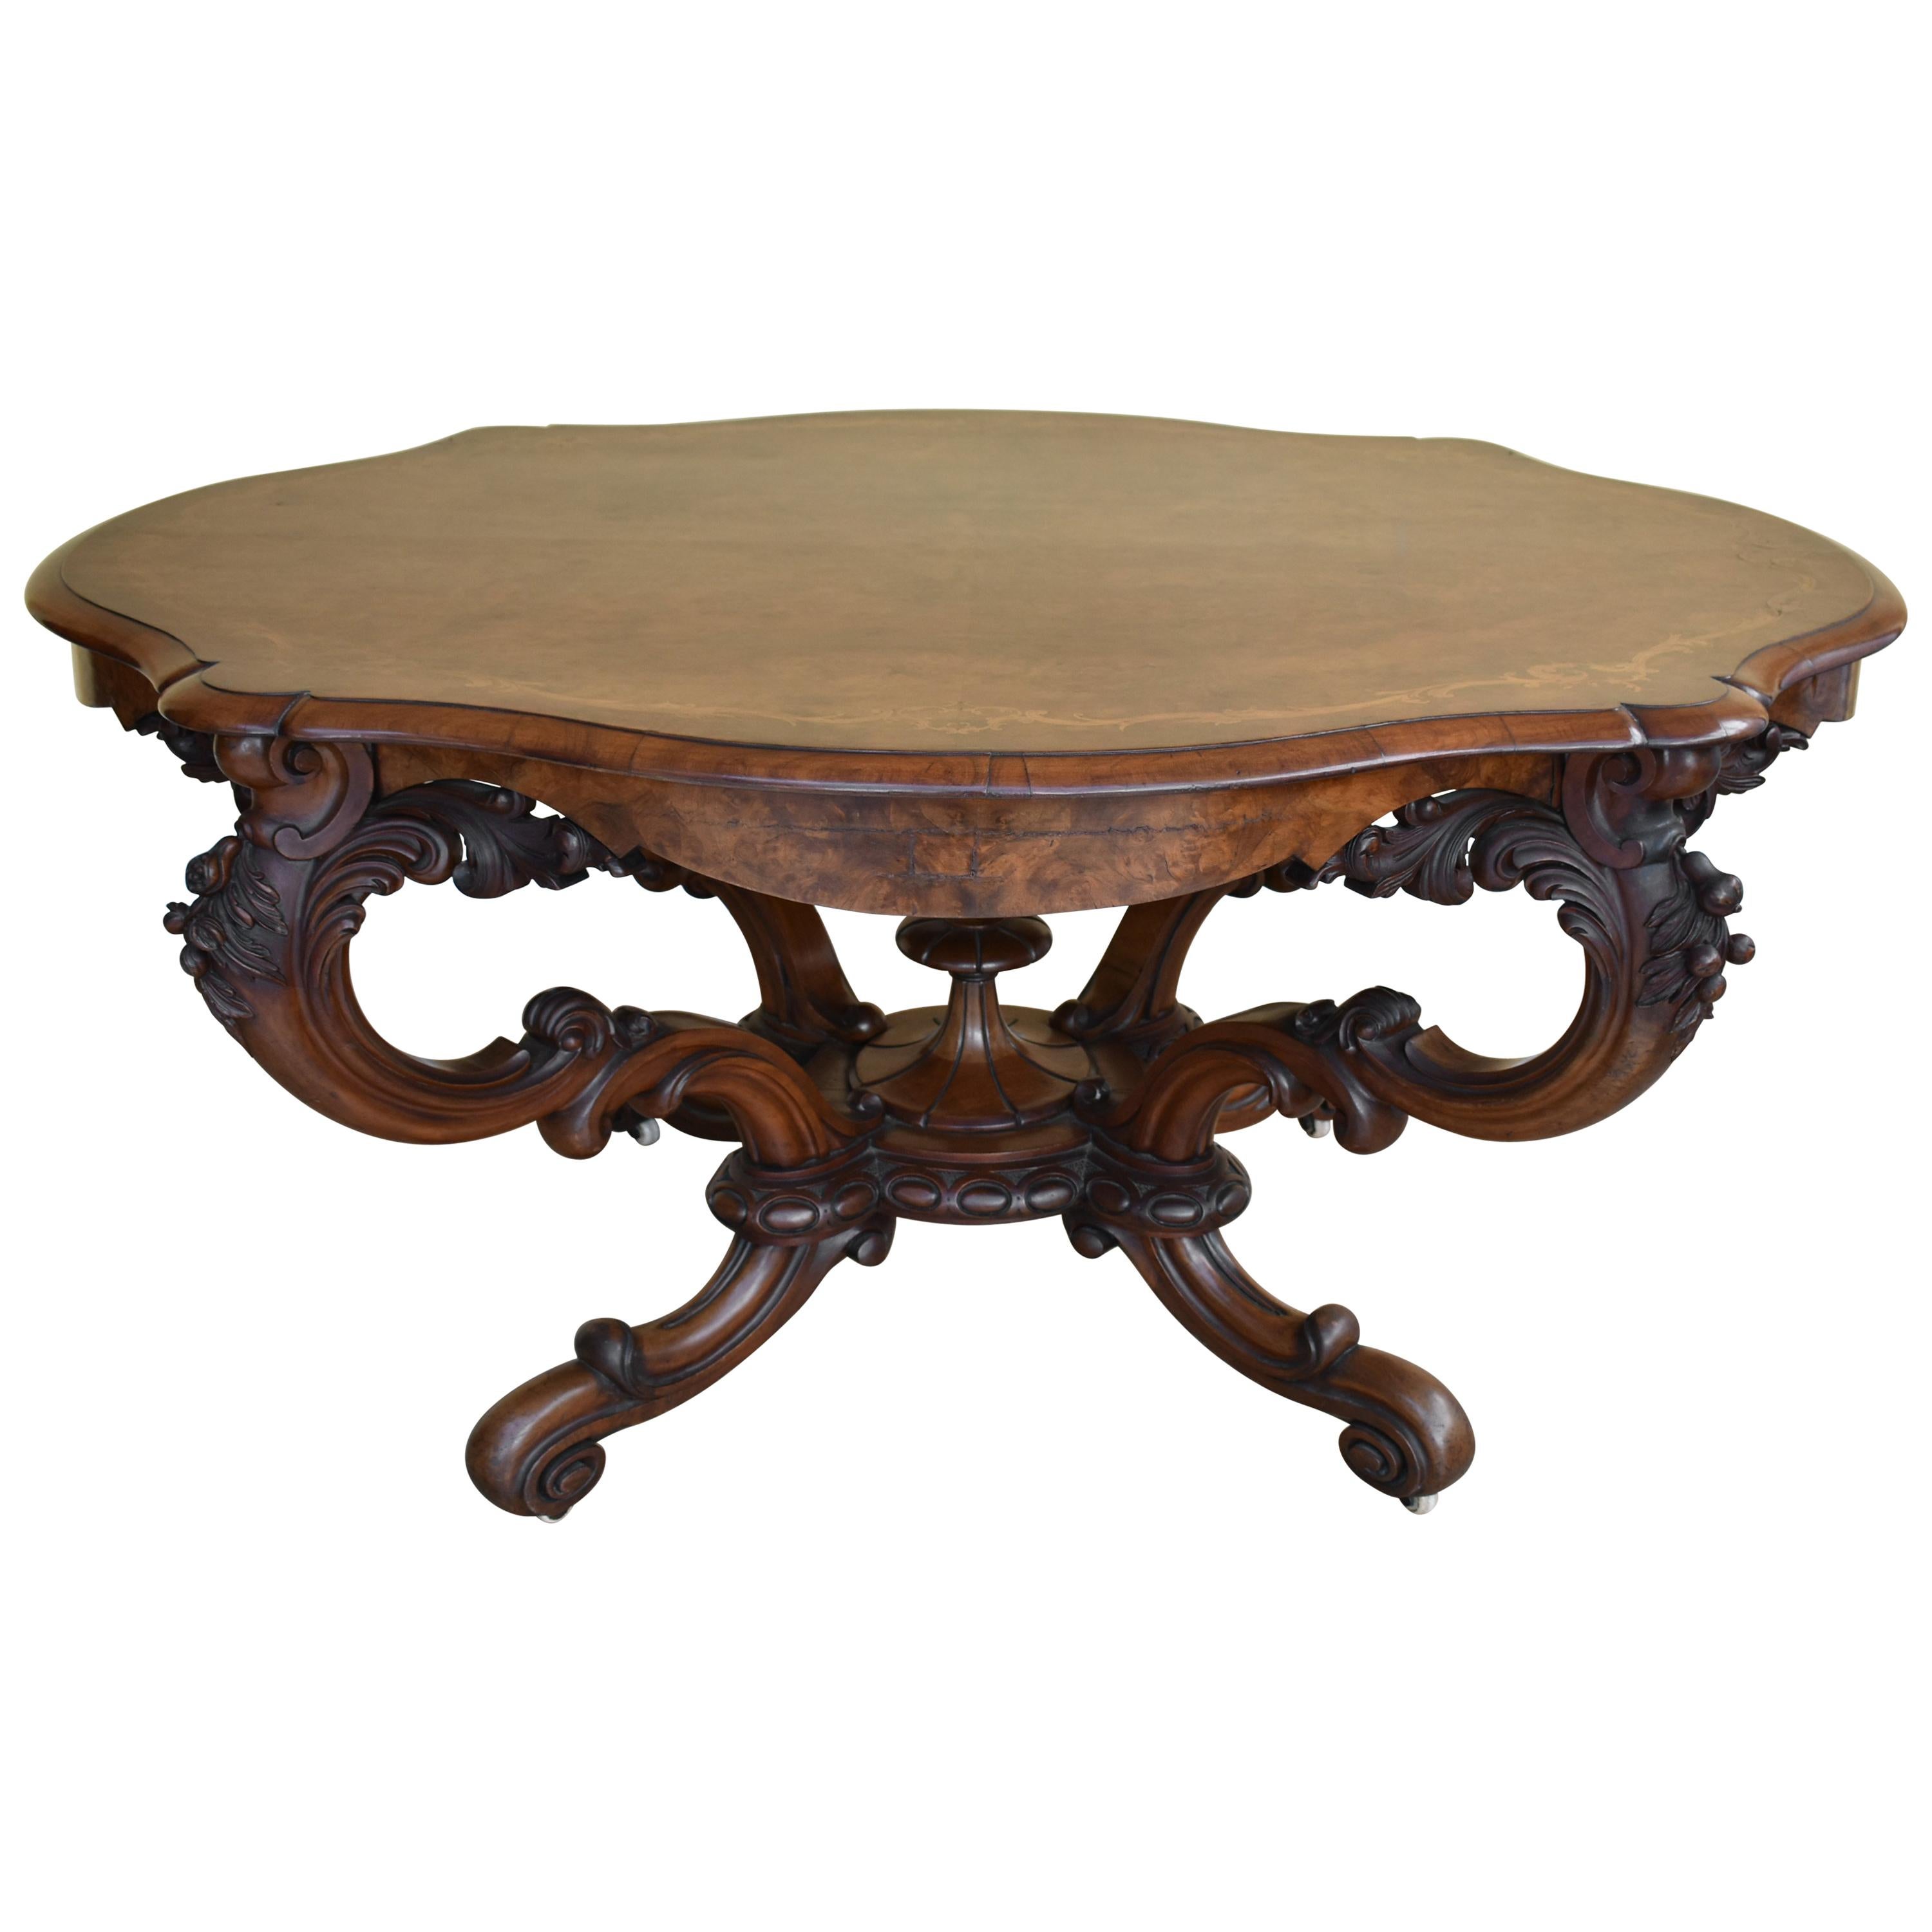 19th Century Victorian Burr Walnut Inlaid Centre Table